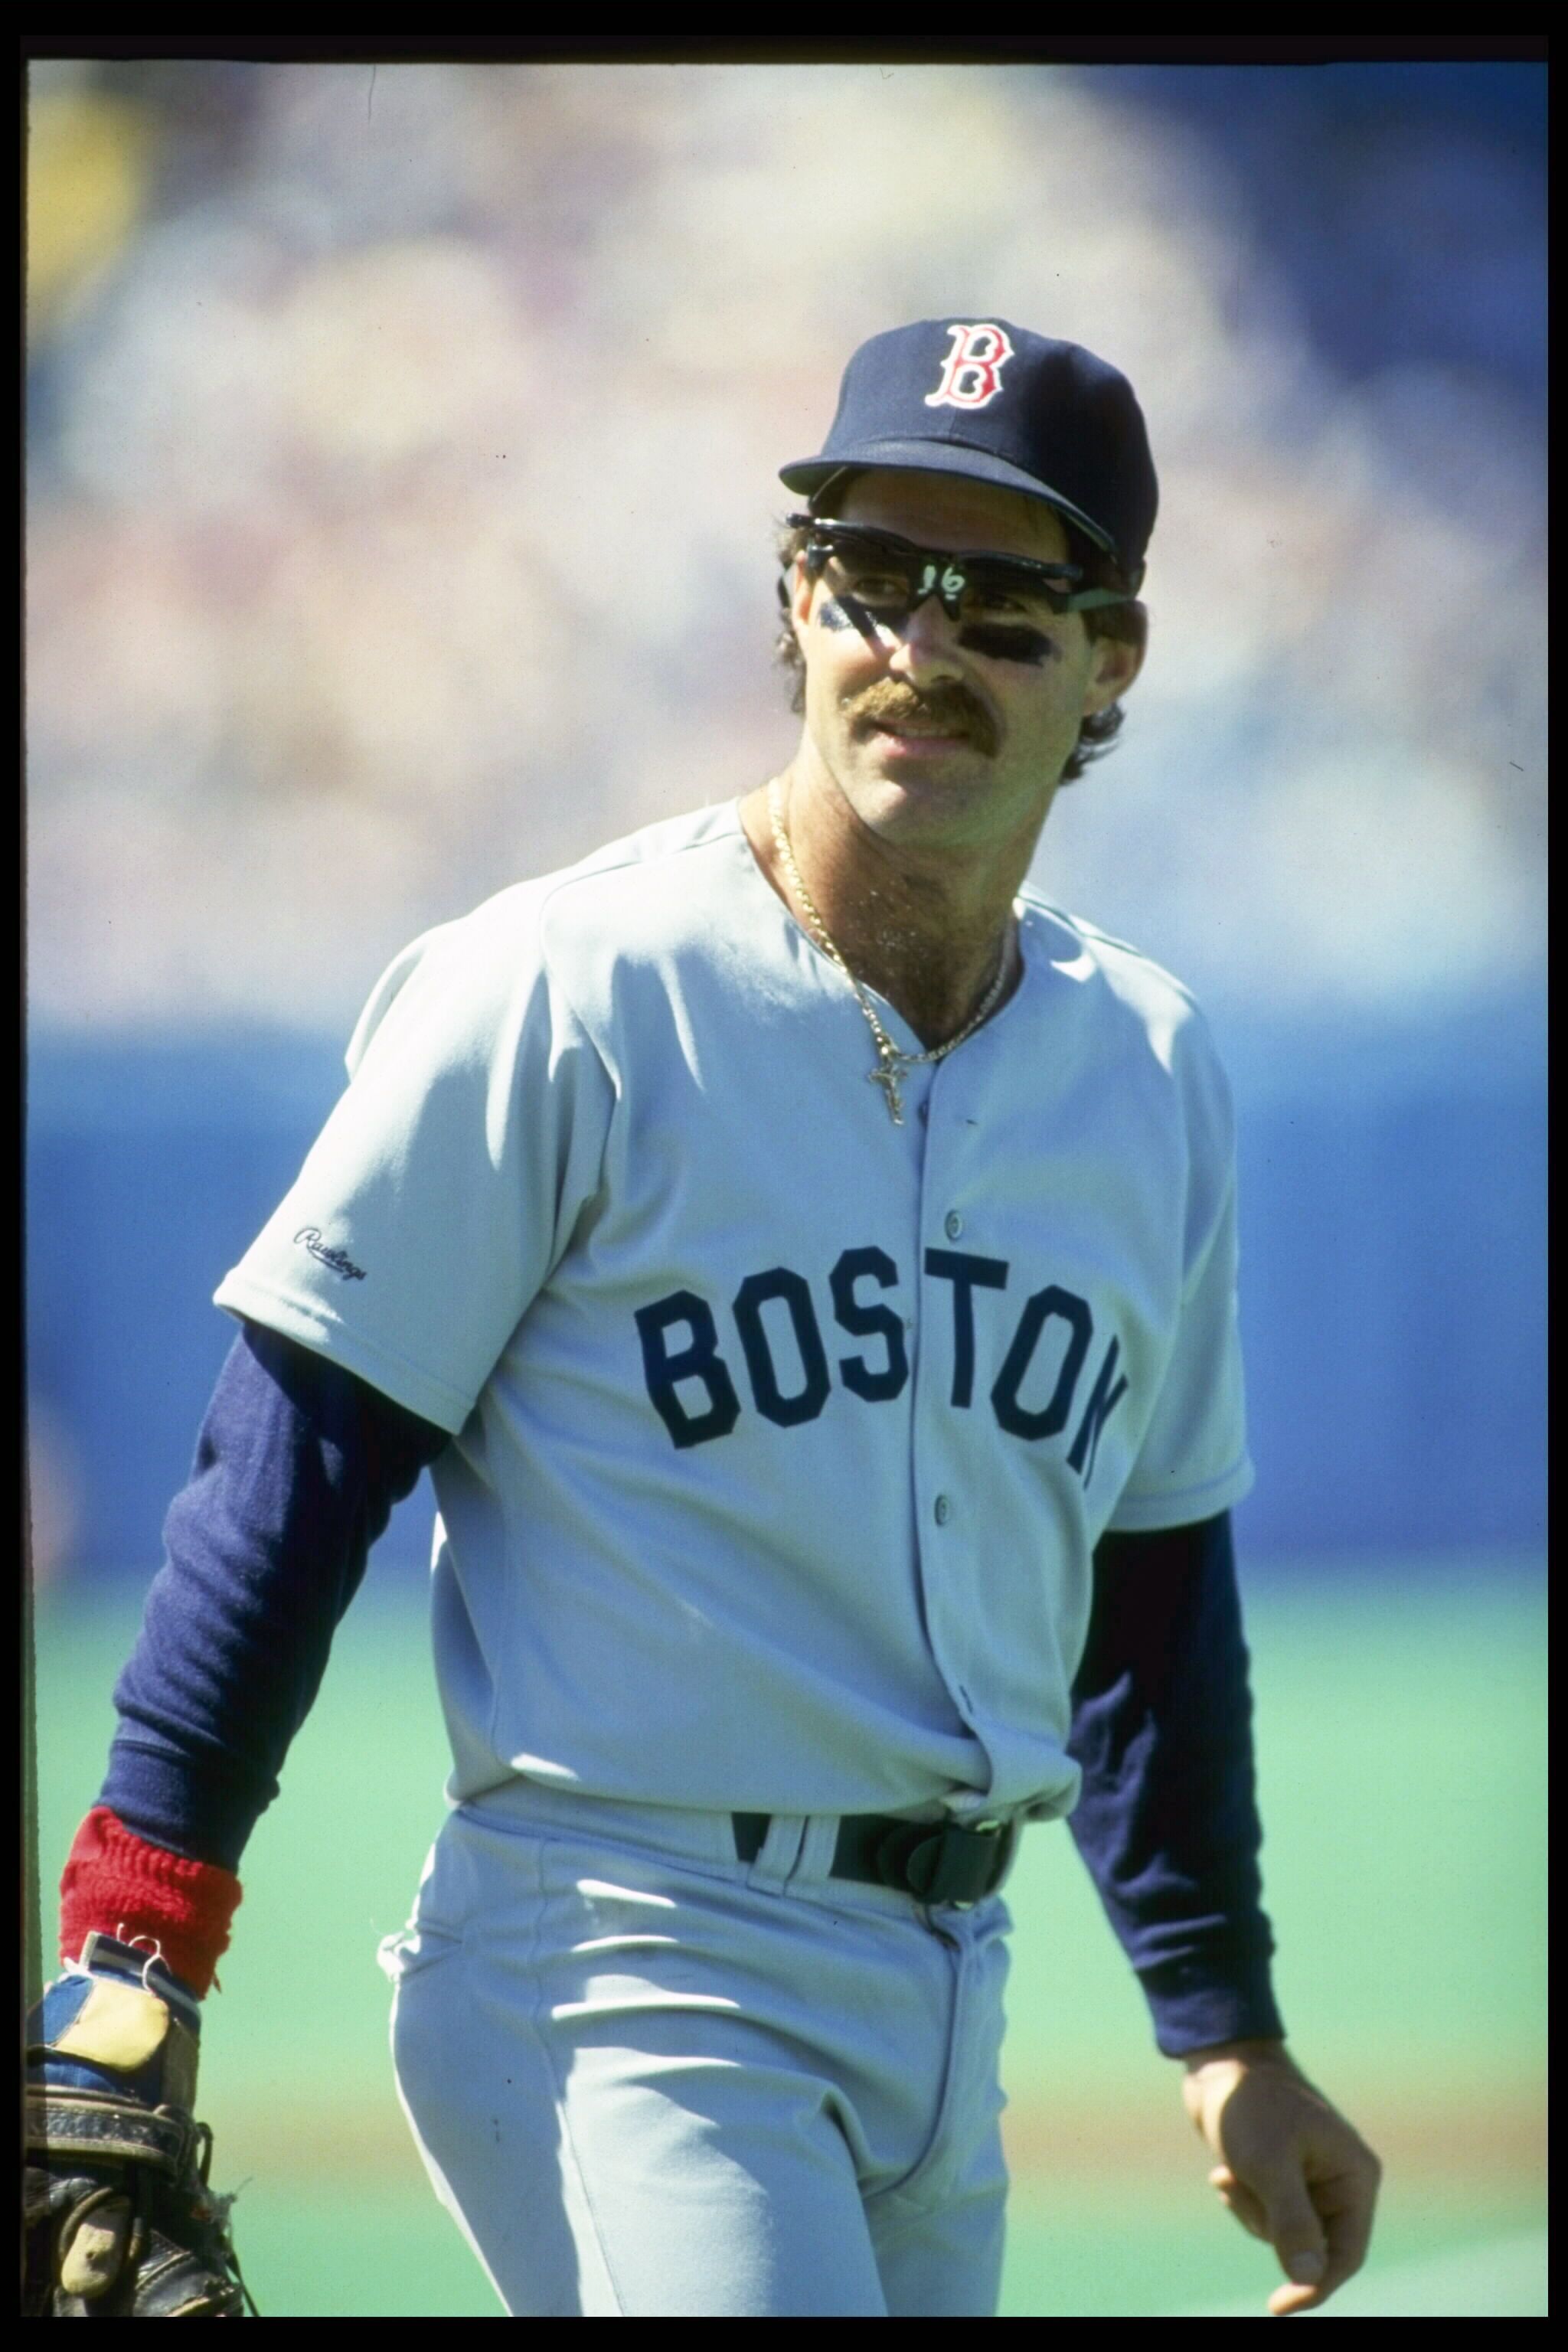 OTD: Bill Buckner error, On This Date: Bill Buckner's error cost the Red  Sox Game 6 of the 1986 World Series., By ESPN